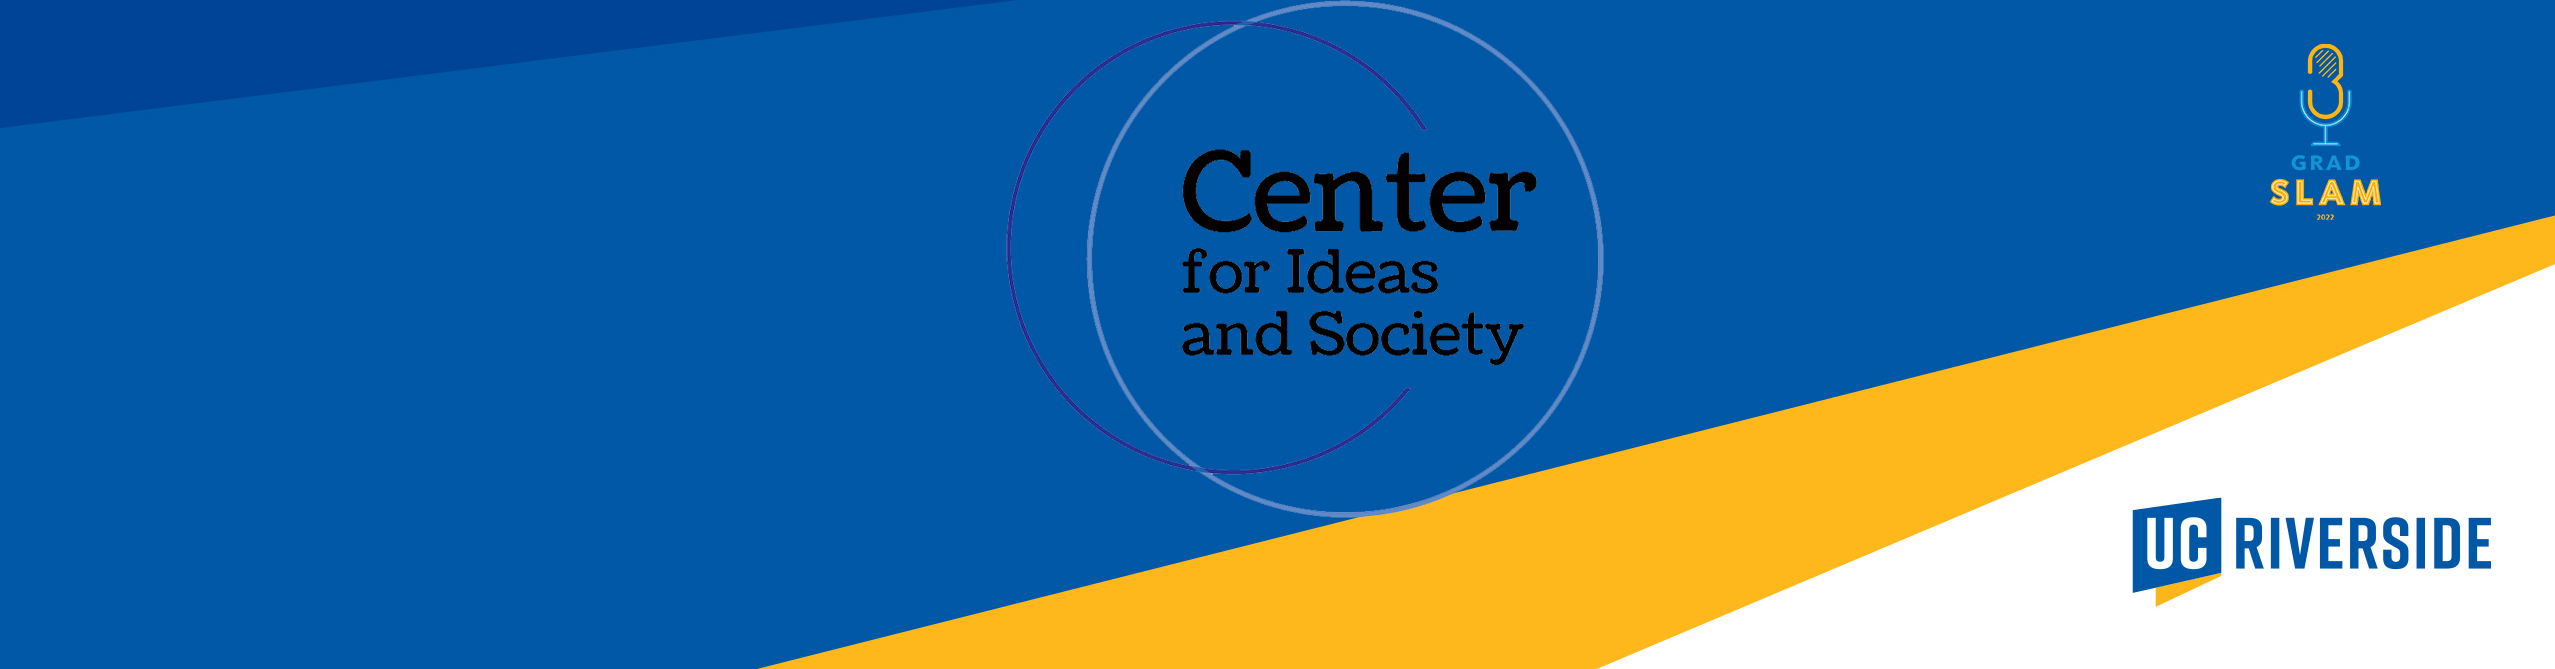 Center for ideas